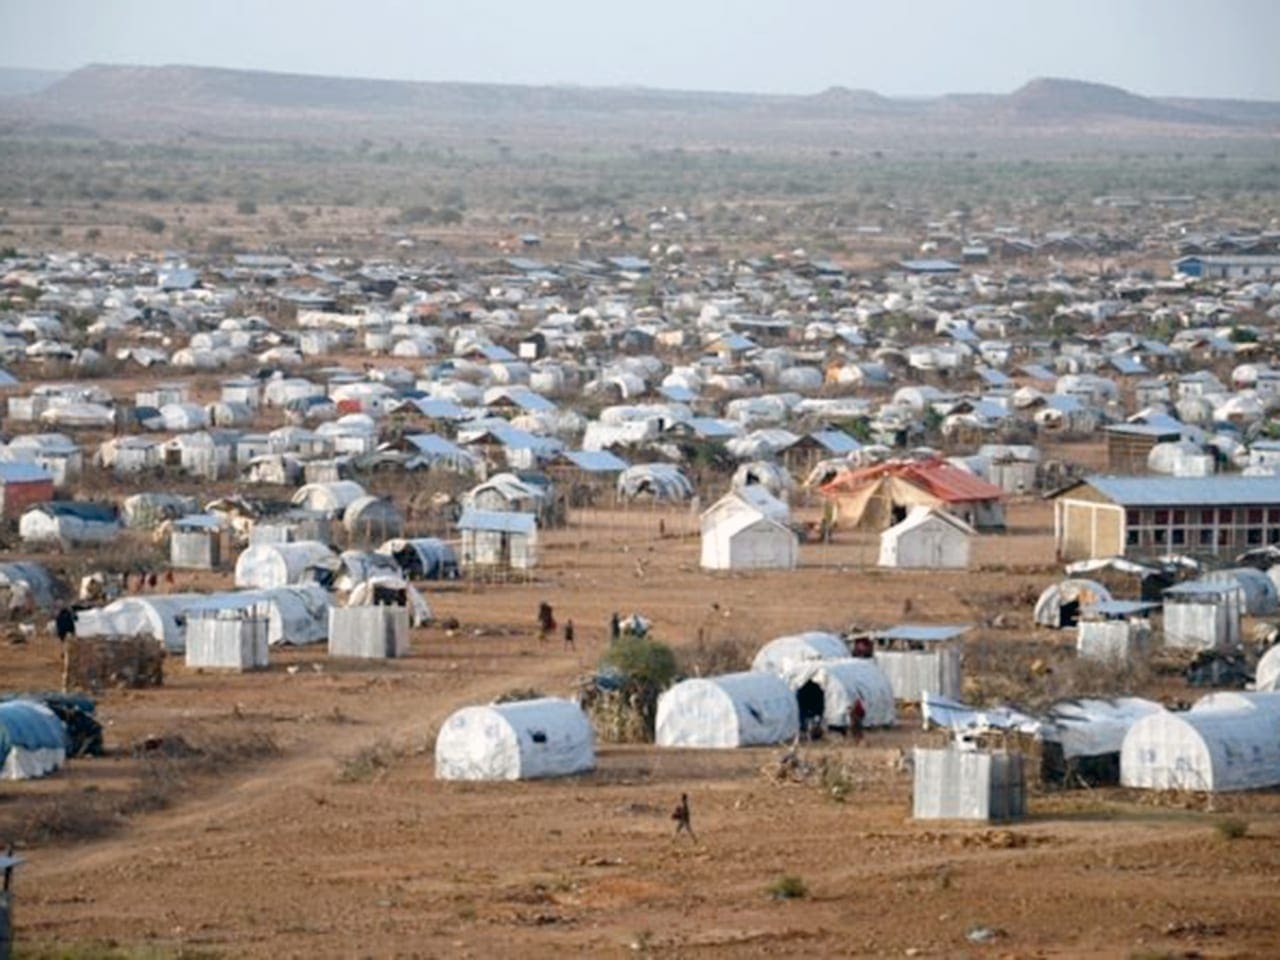 Plans to close Kenya refugee camps causing distress to refugees